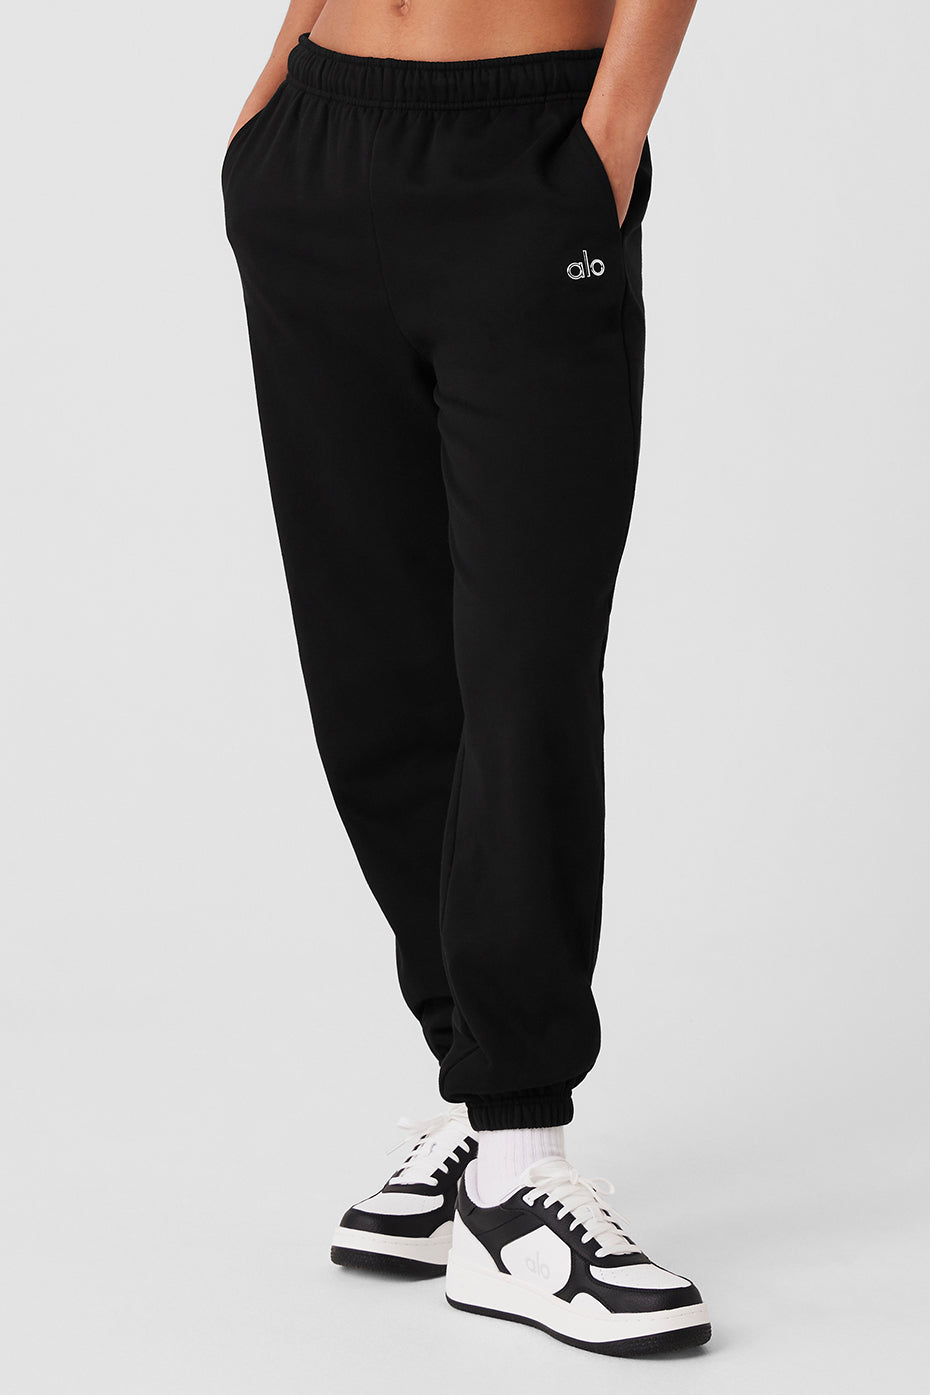 Eytino Women Active Pants Camo Printed Yoga Workout Pants Drawstring  Sweatpants with Pockets,X-Large Black